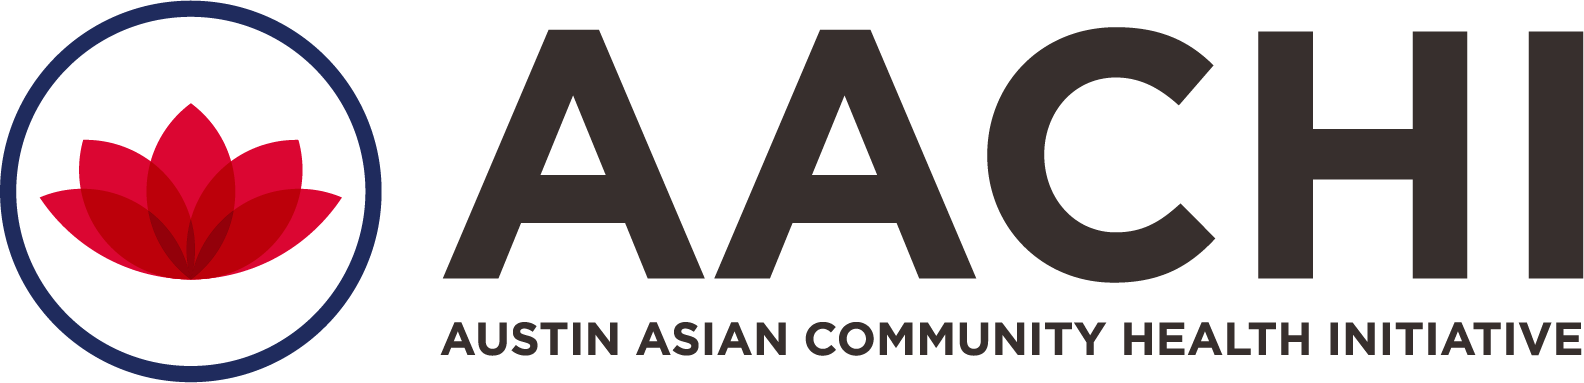 Austin Asian Community Health Initiative